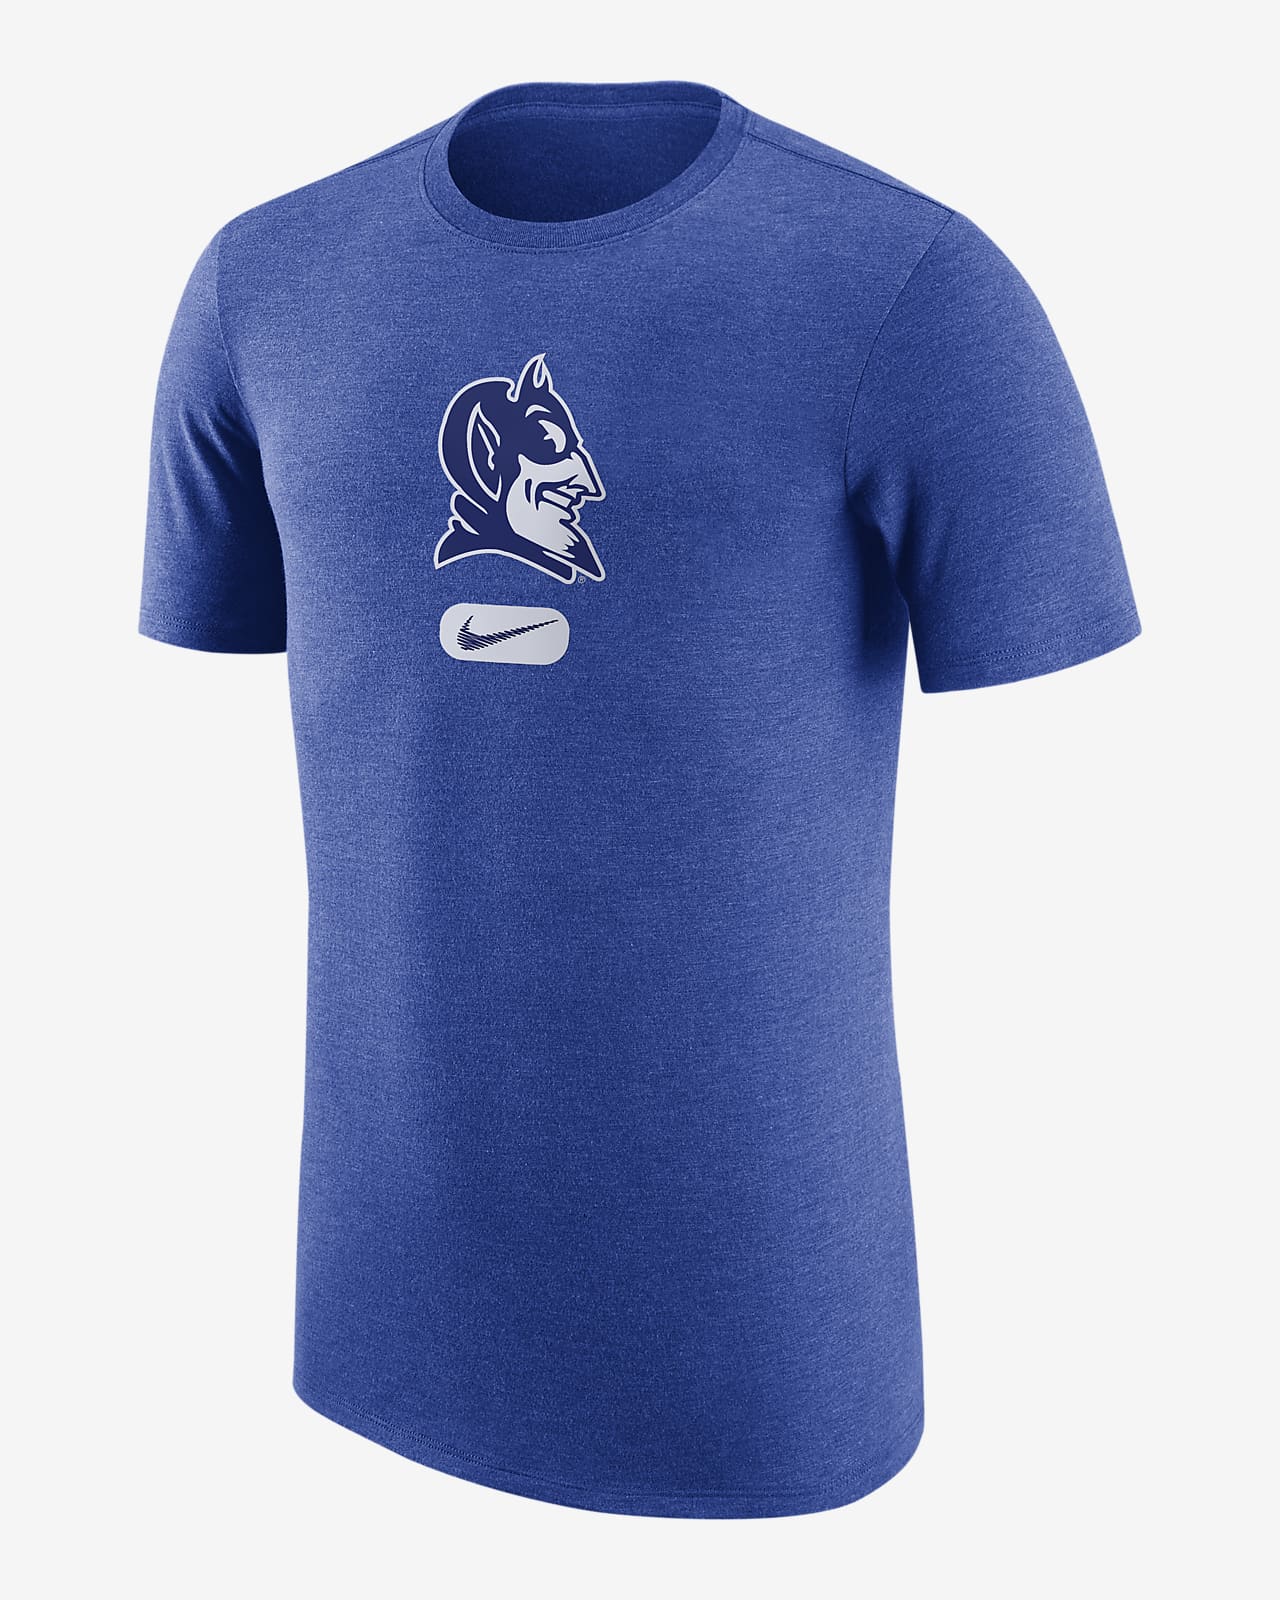 Duke Men's Nike College T-Shirt